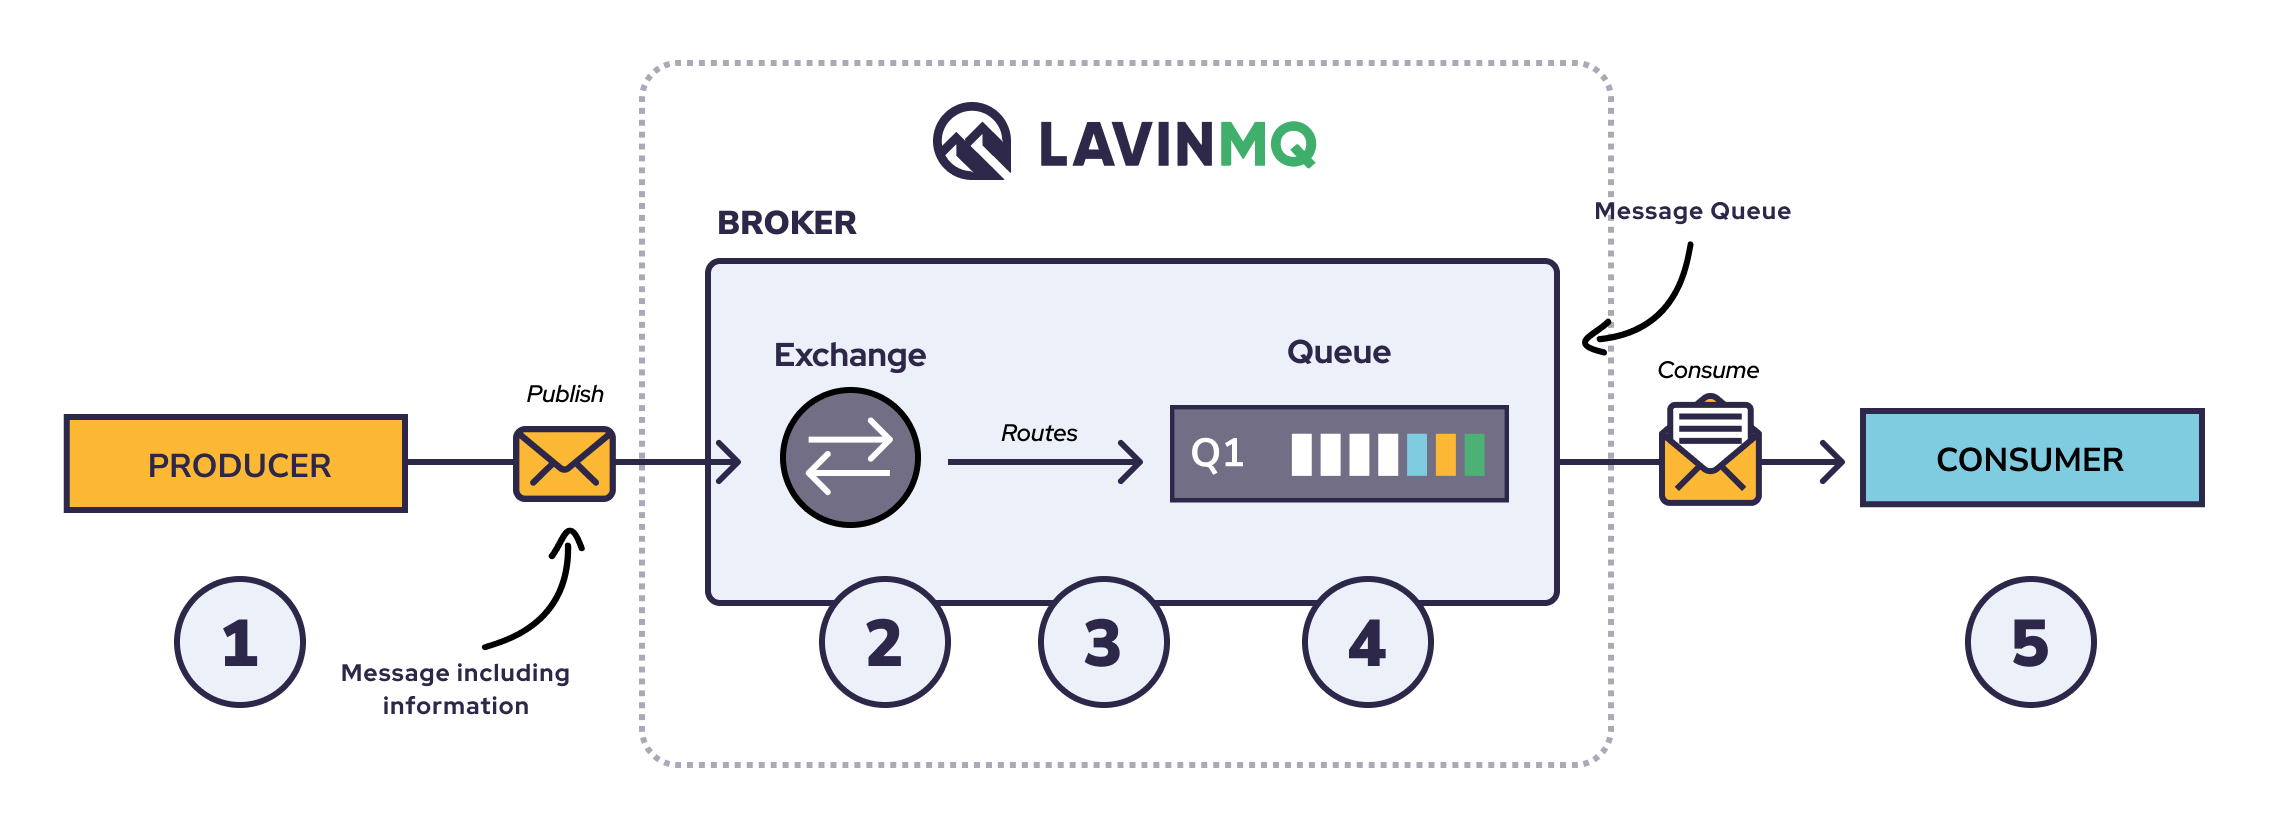 LavinMQ messaging architecture